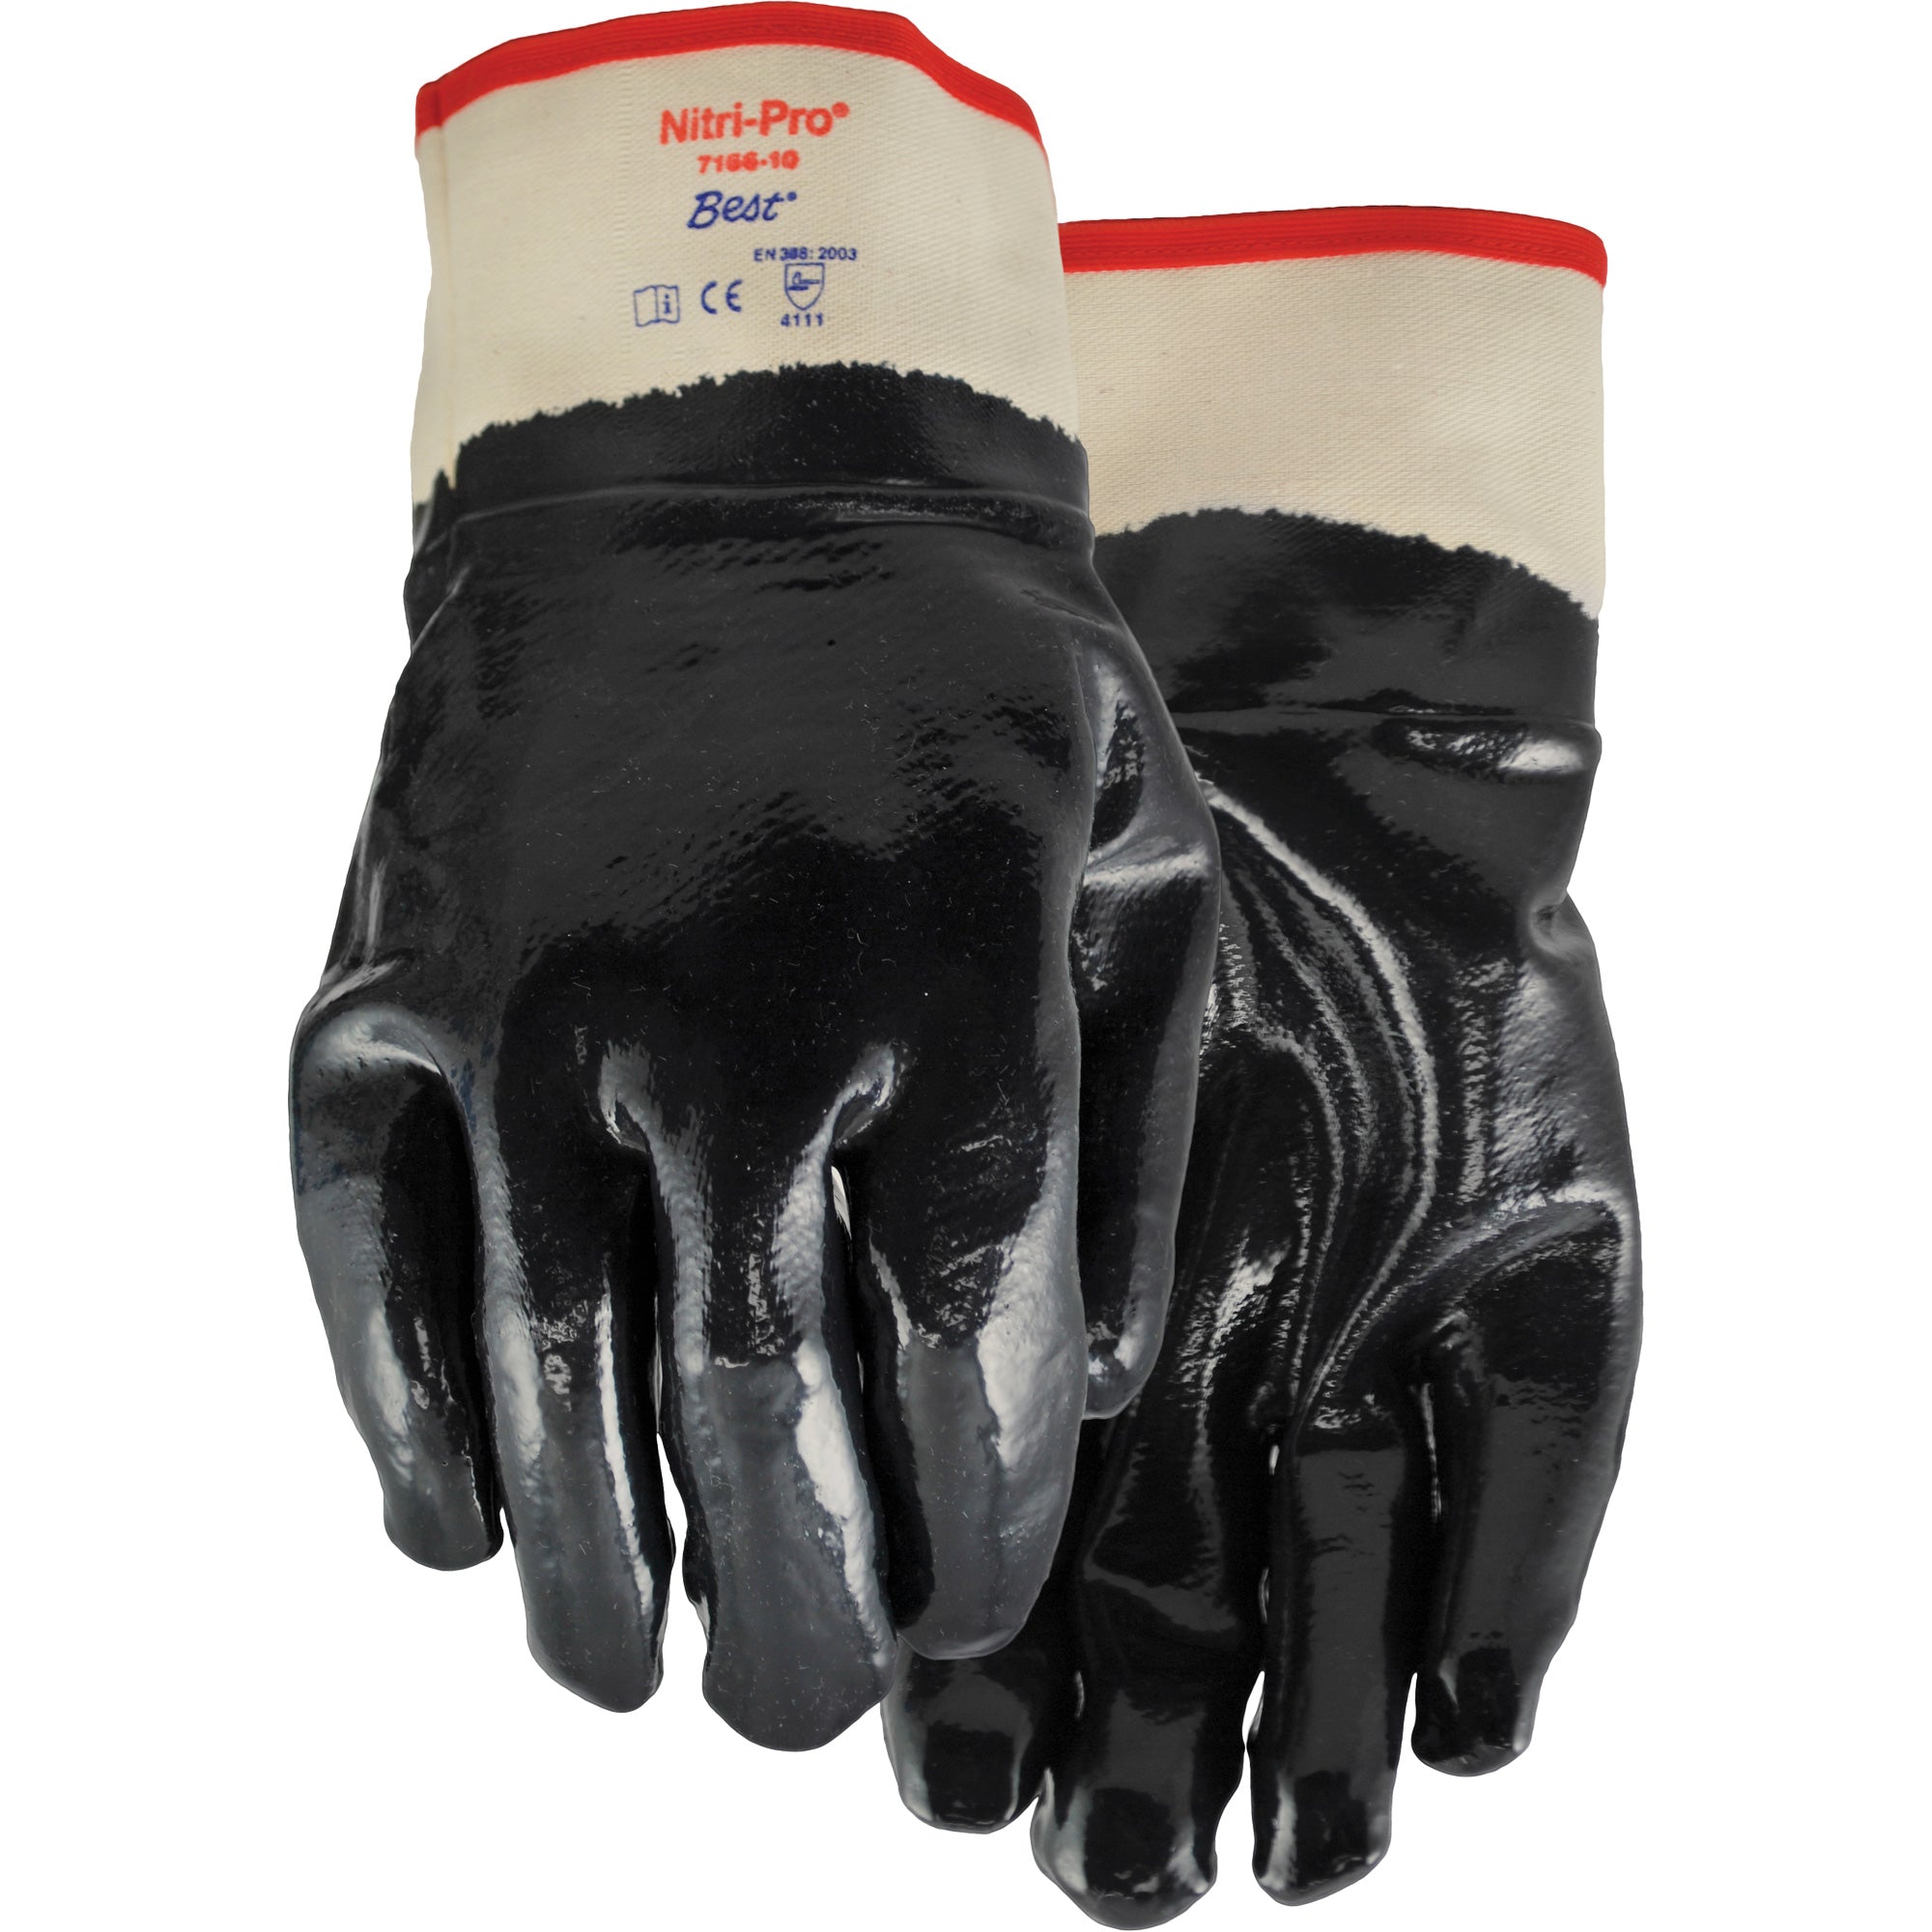 Nitri-Pro® Gloves, Foam Nitrile Coating, Jersey/Cotton Shell - Size 10